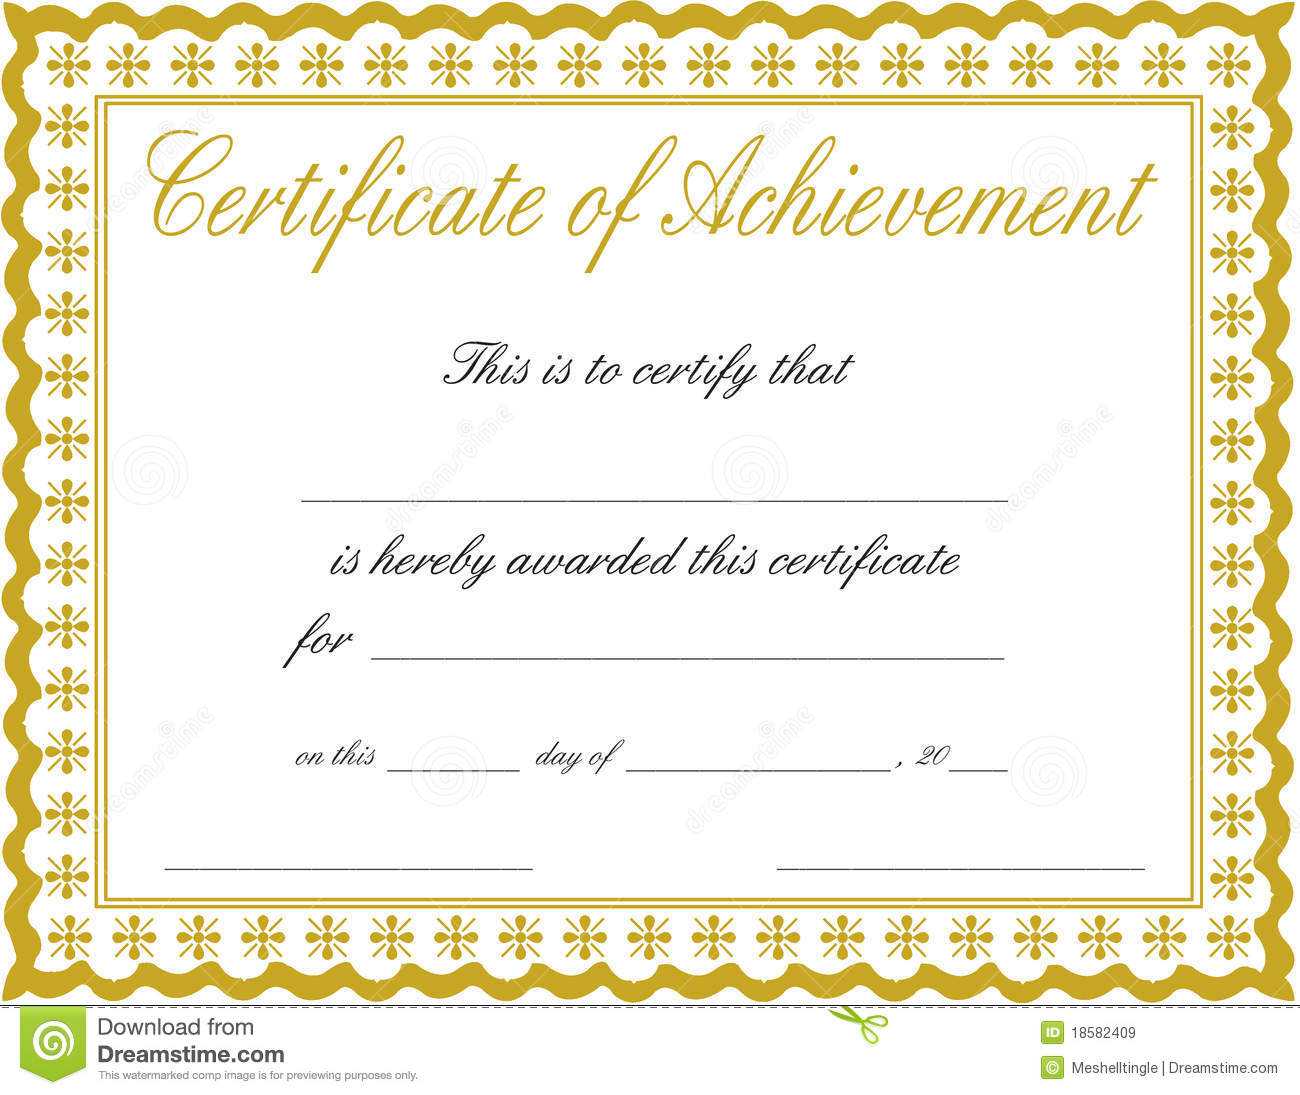 Docx Achievement Certificates Templates Free Certificate Of In Blank Certificate Of Achievement Template